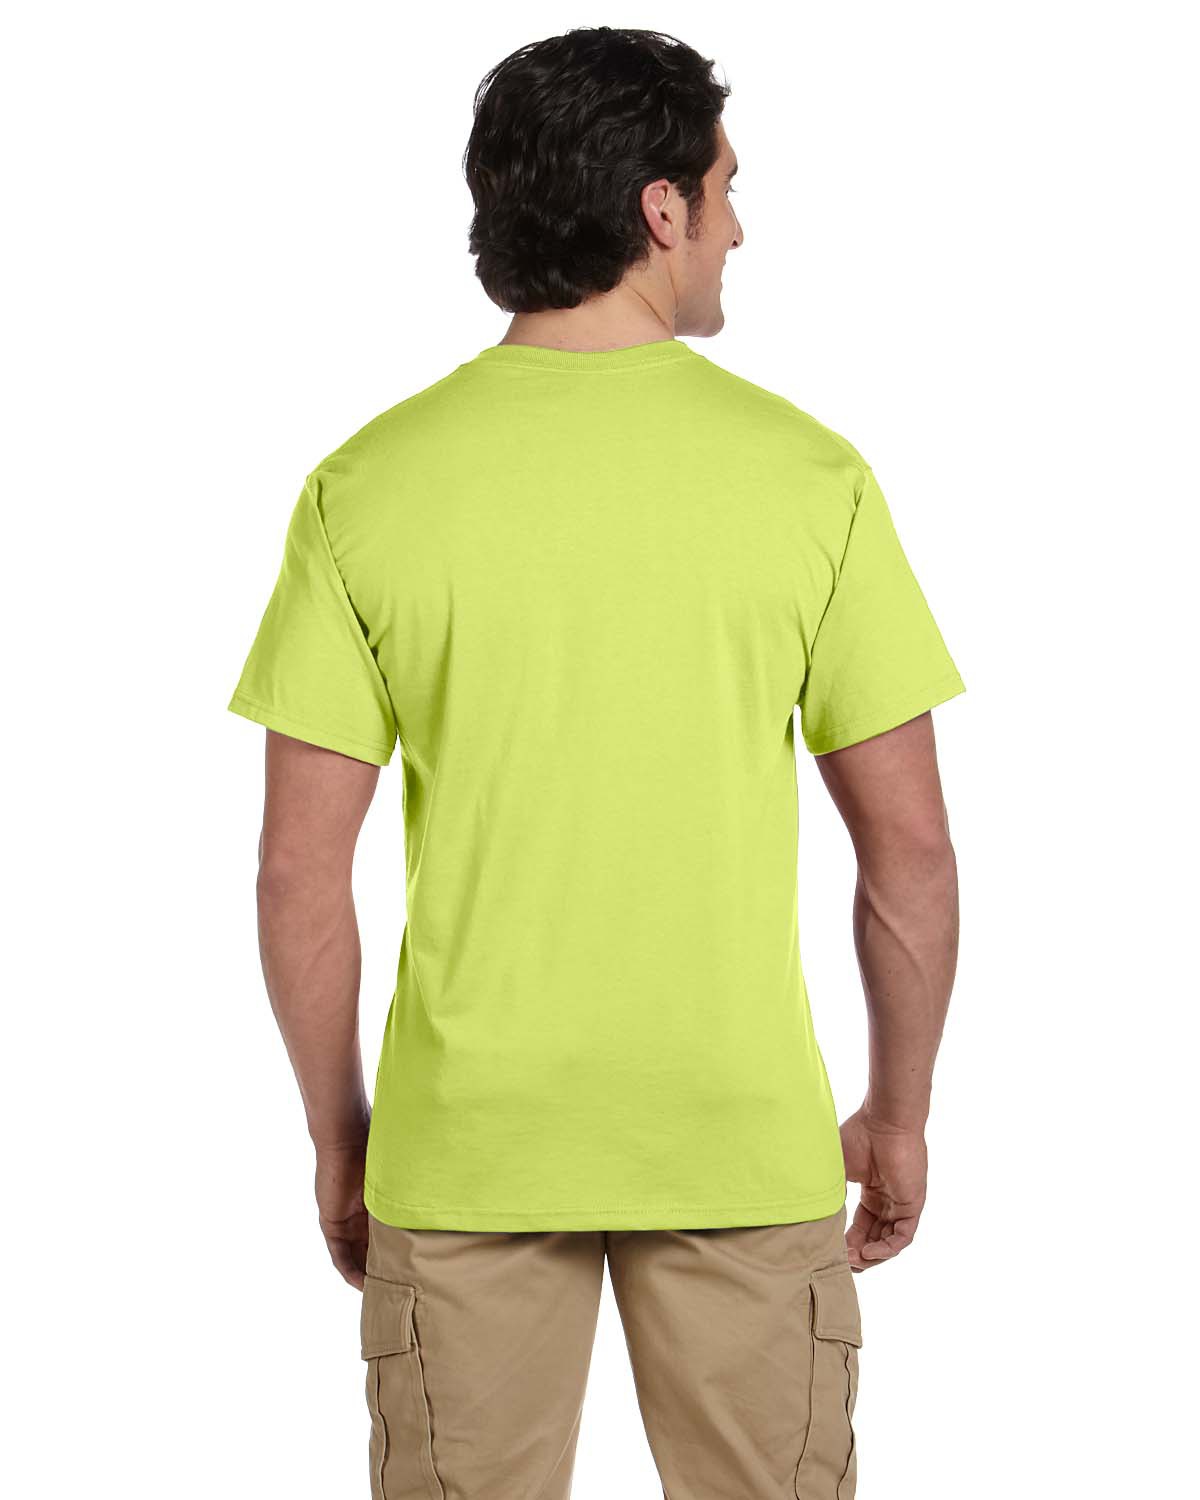 Jerzees 29P Dri-Power ® 50/50 Cotton/Poly Pocket T-Shirt